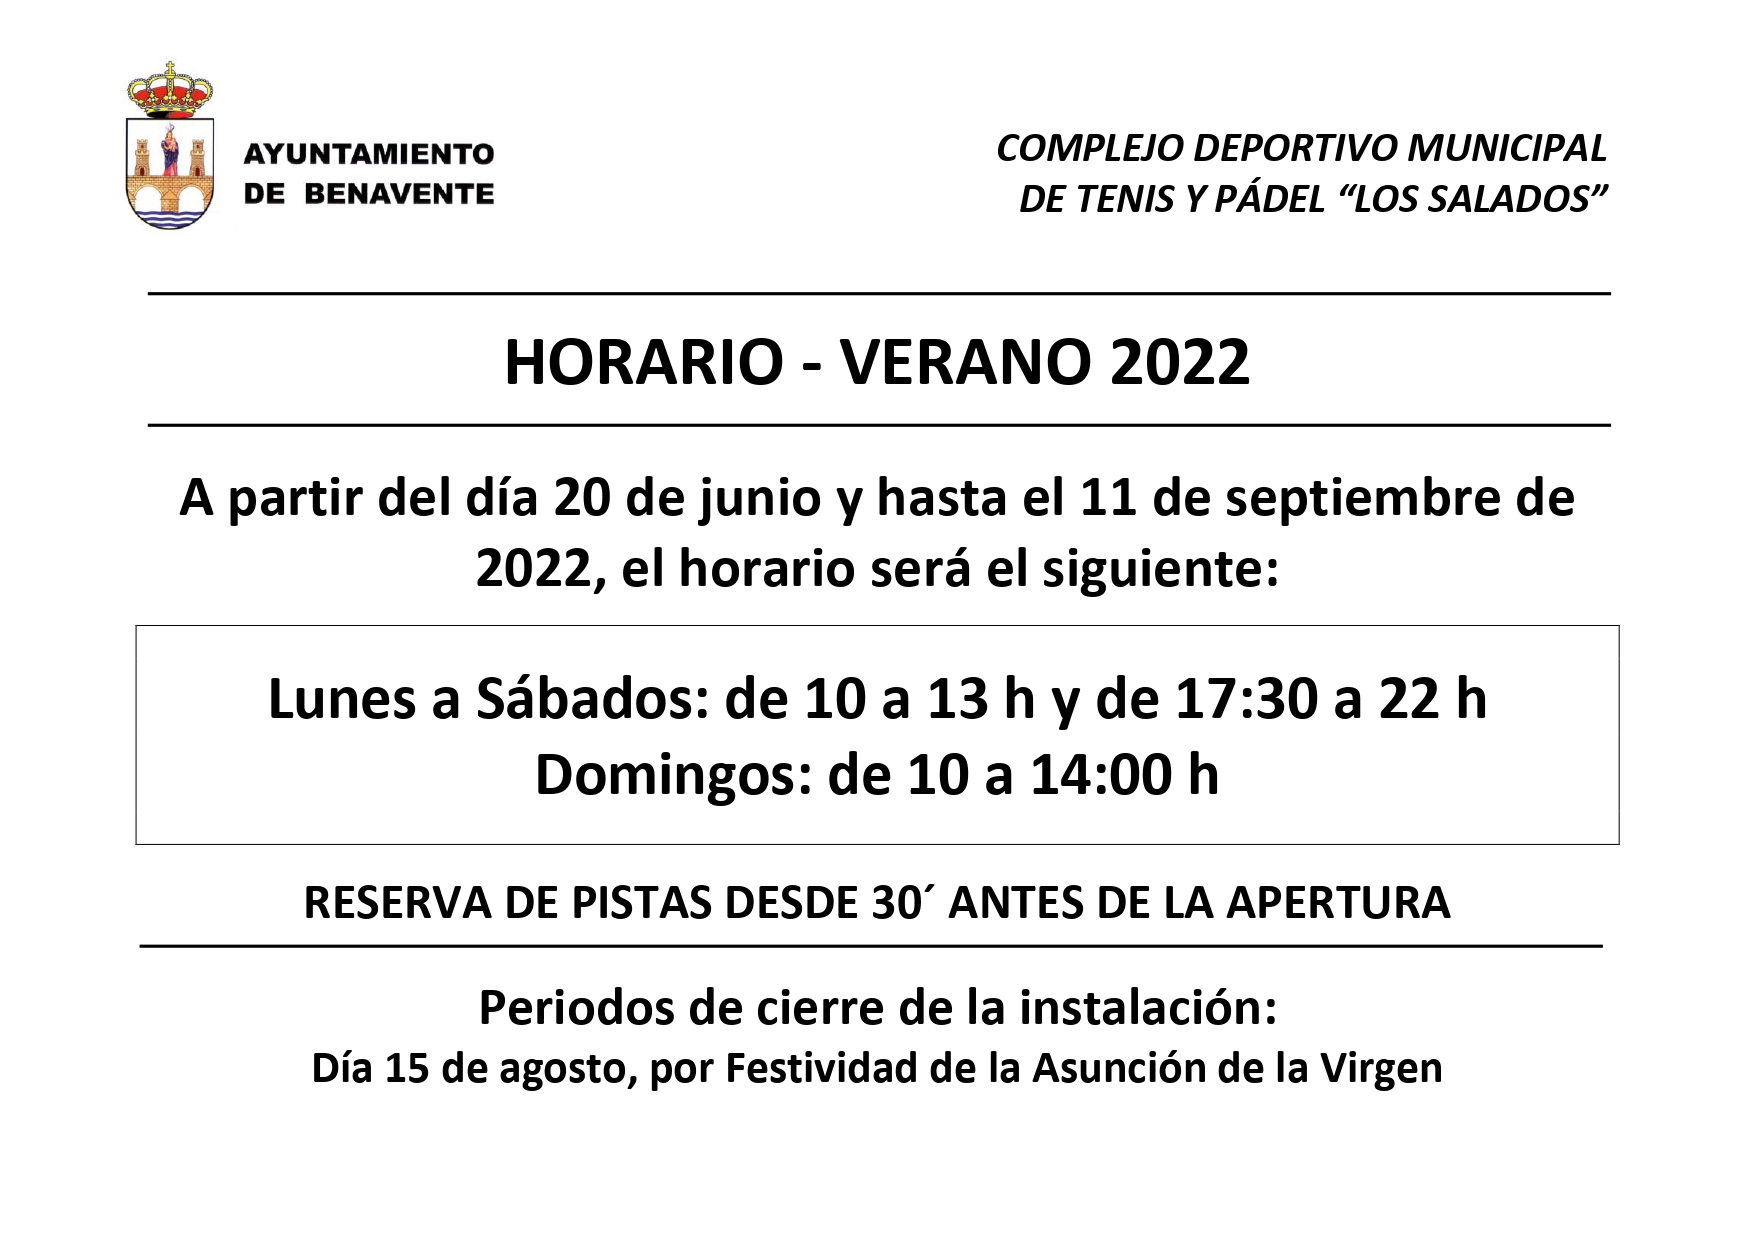 HORARIO VERANO 2022